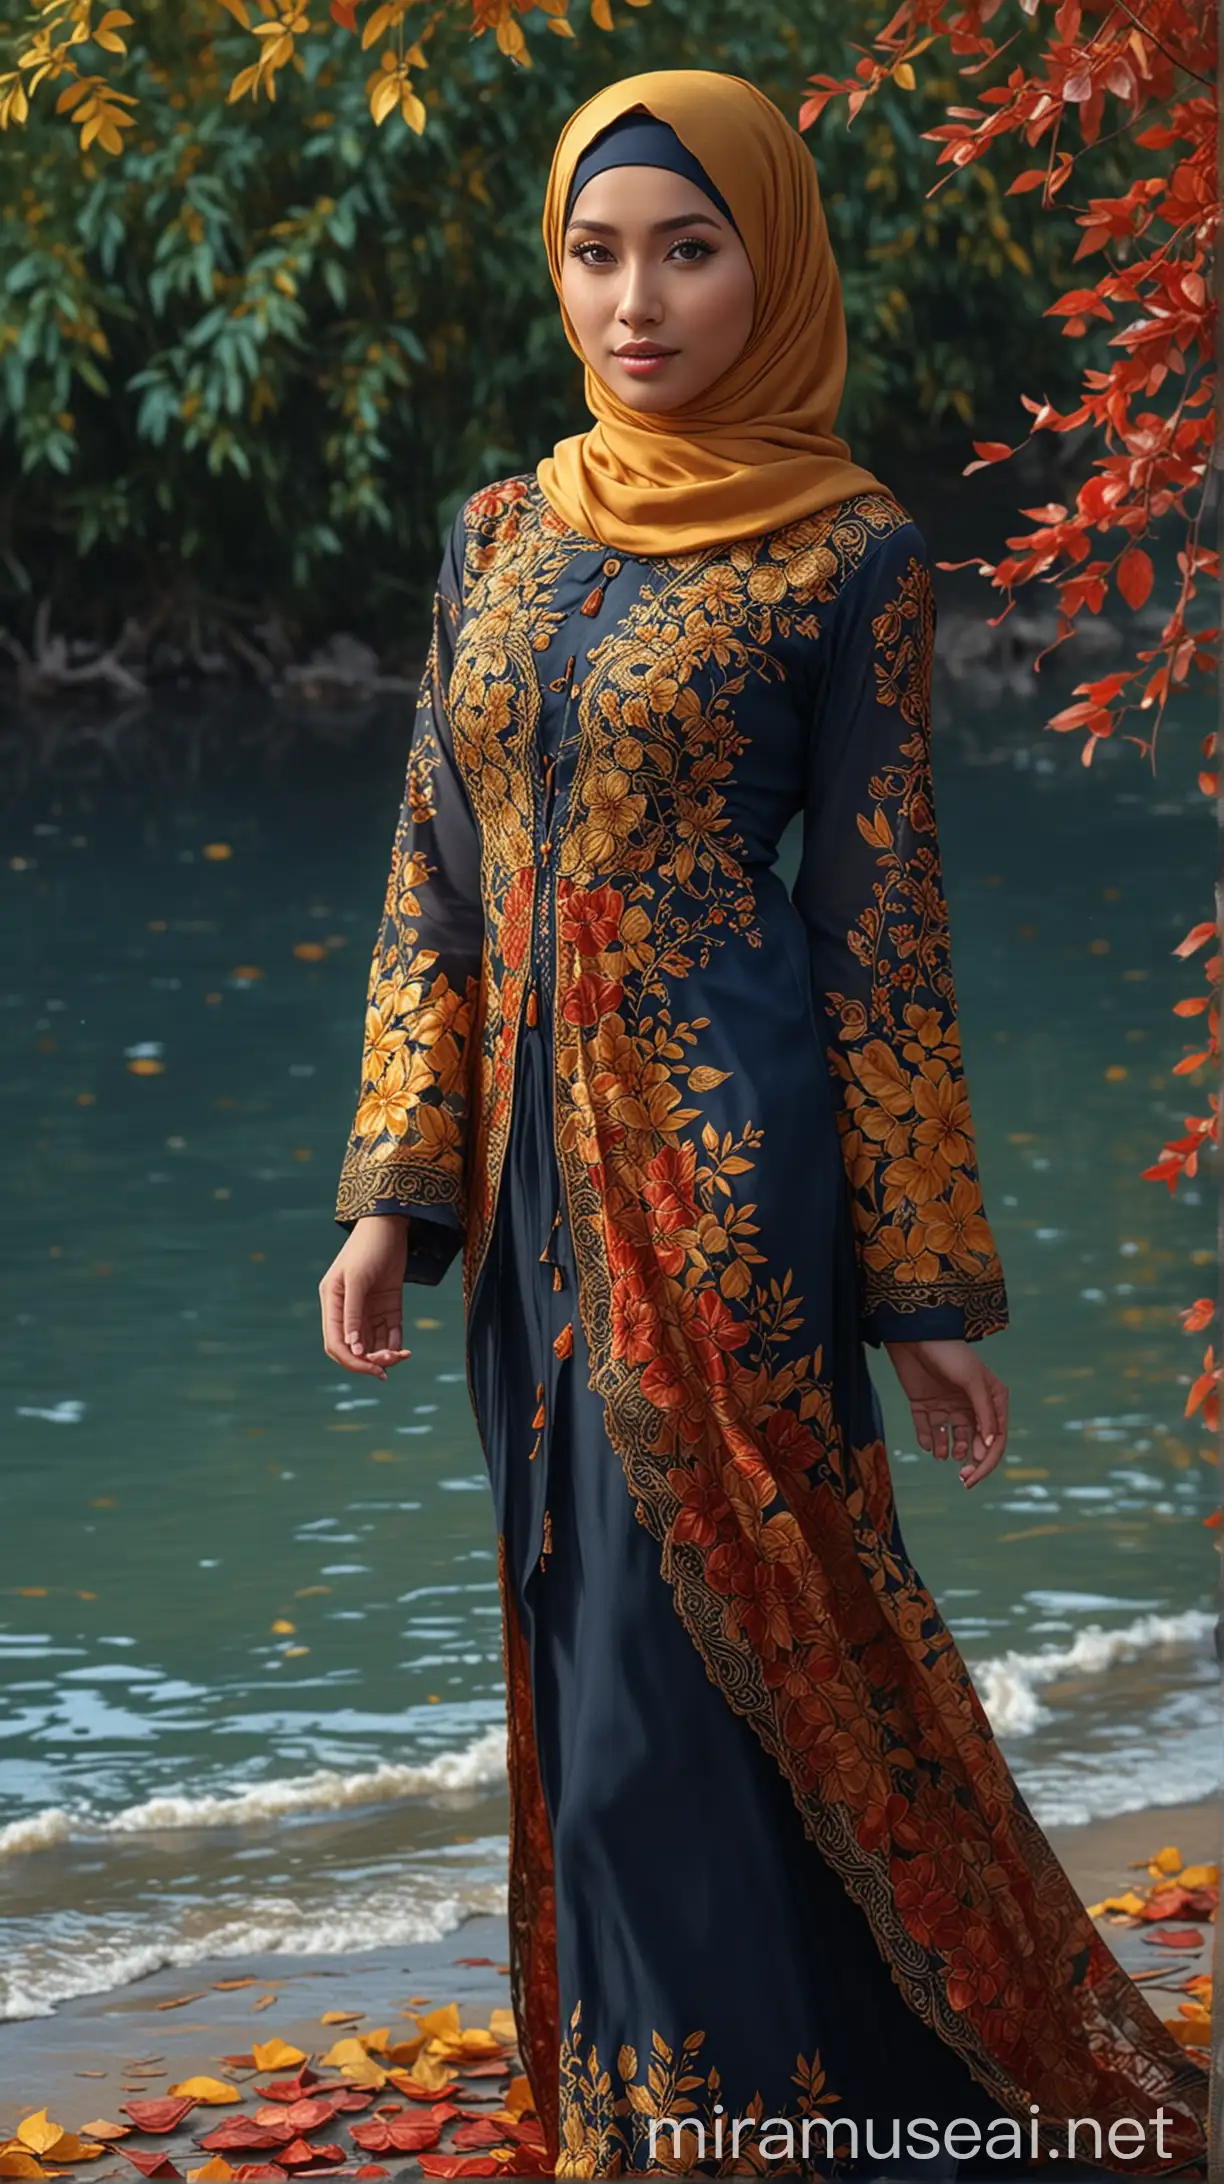 Elegant Woman in Hijab and Kebaya Amidst Vibrant Spring Foliage